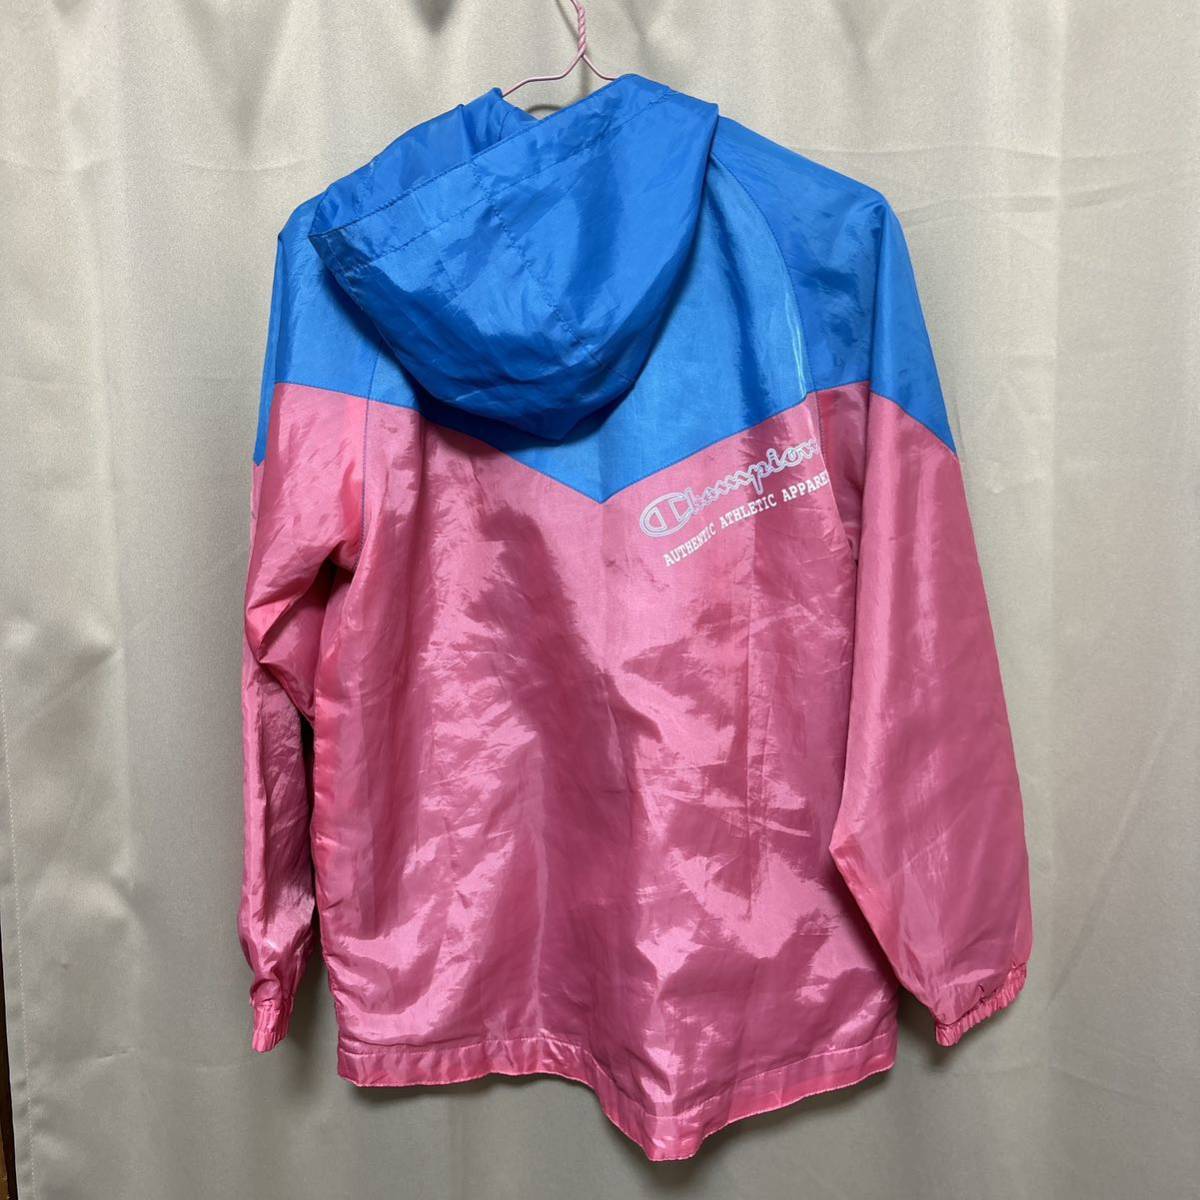  Champion Wind breaker 150 nylon jacket Parker 